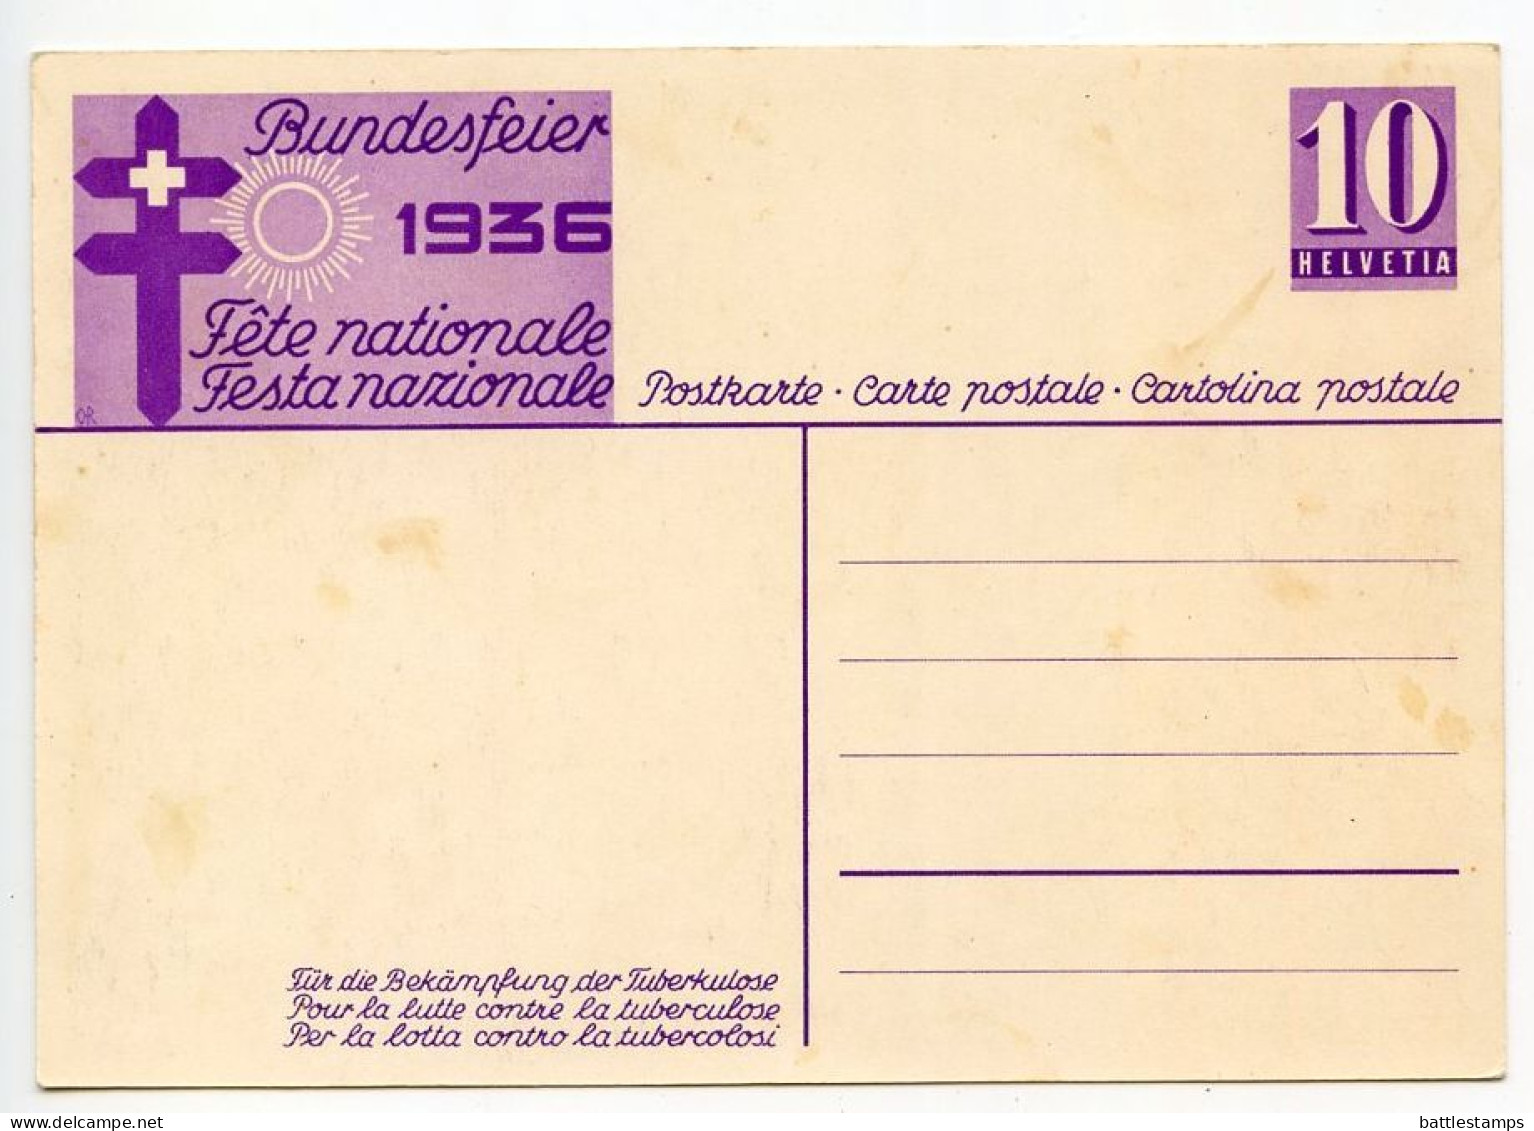 Switzerland 1936 Mint Illustrated Postal Card - 10c. Bundesfeir, Fete Nationale, Festa Nazionale - Entiers Postaux